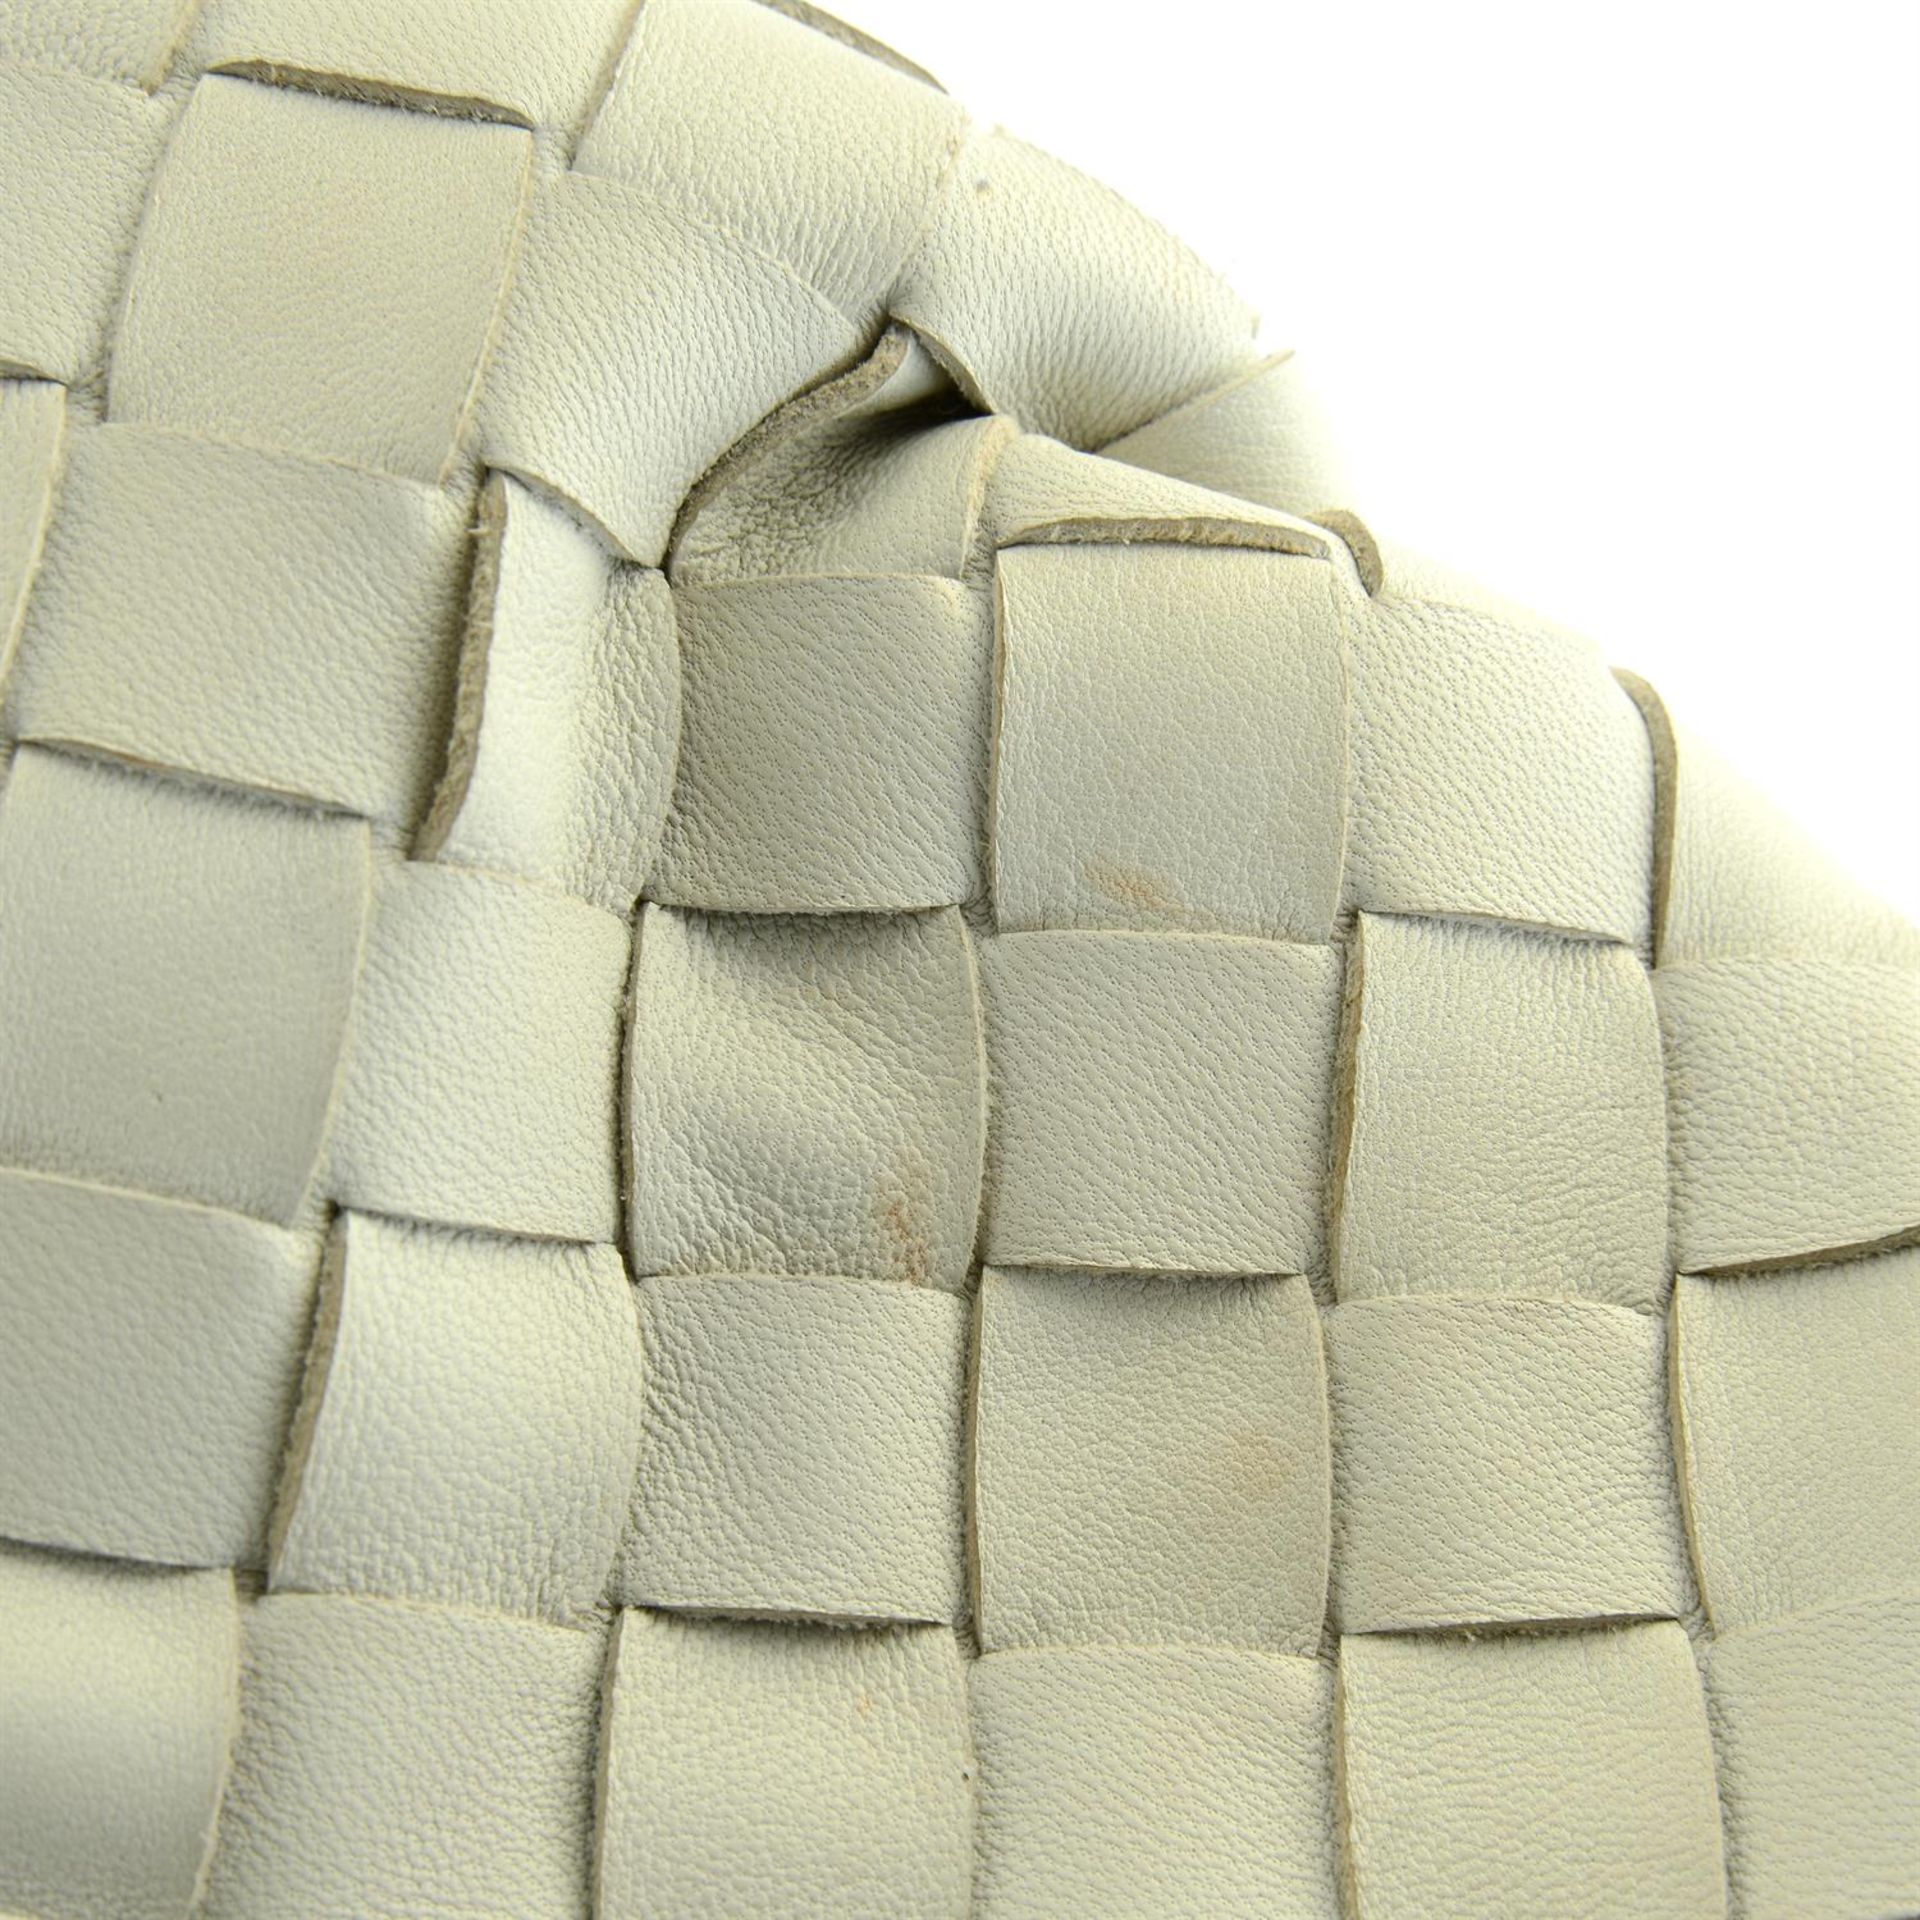 BOTTEGA VENETA - an off-white leather The Pouch. - Image 4 of 4